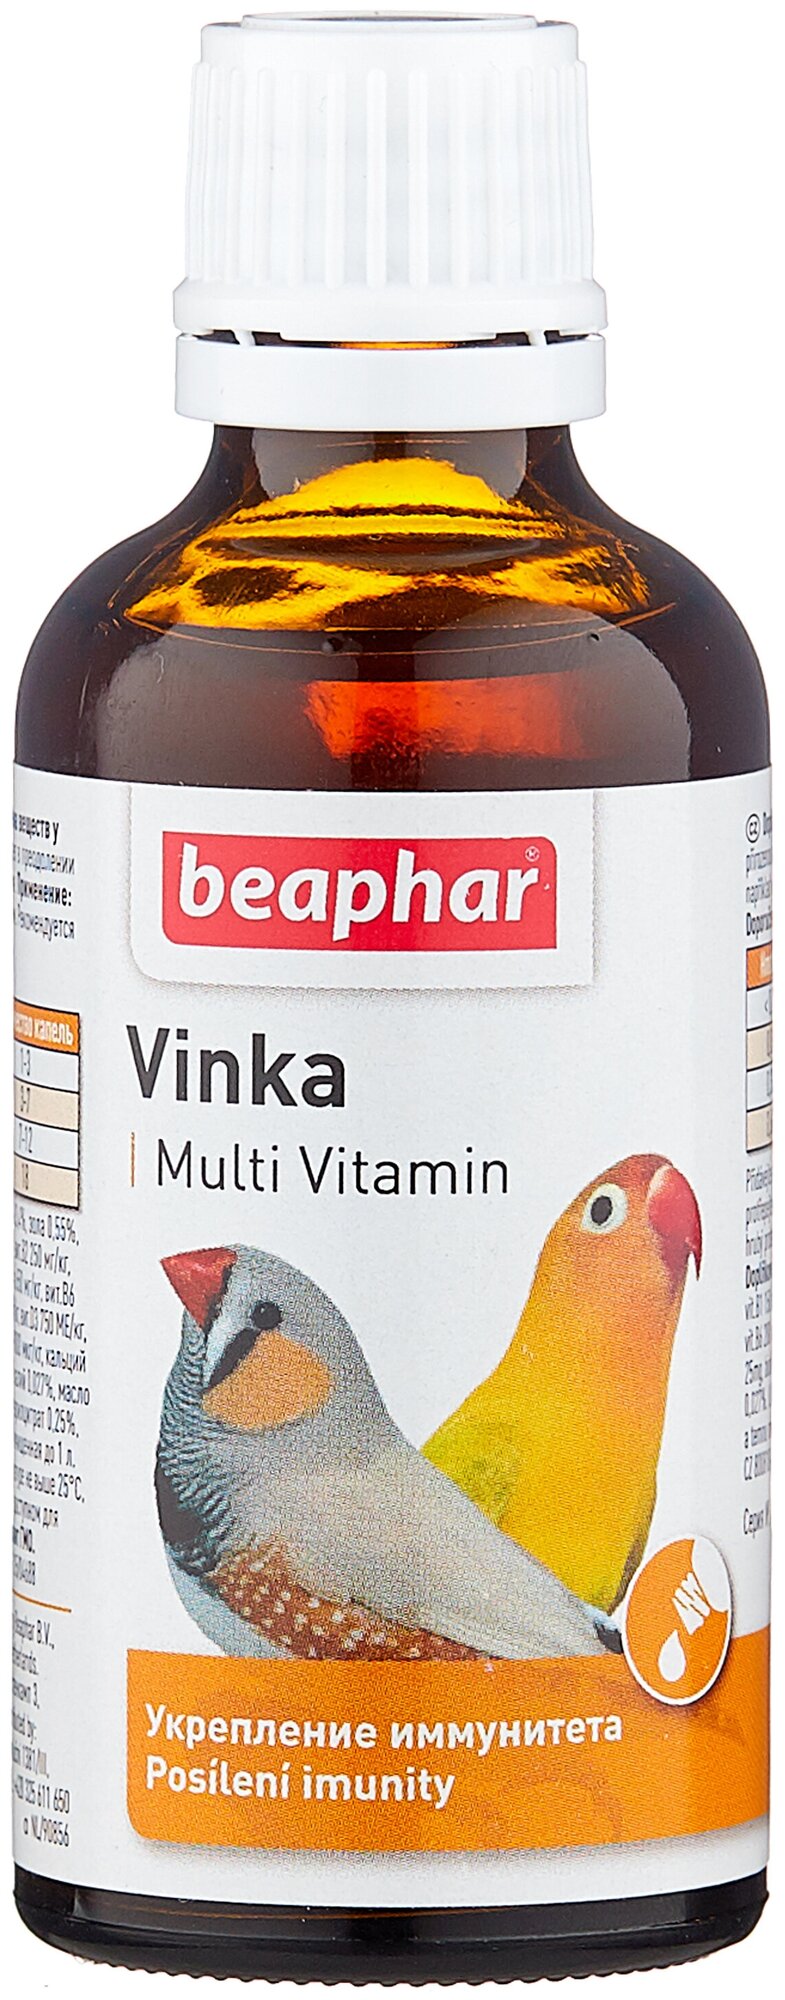 Vinka (Beaphar) кормовая добавка для птиц, 50 мл